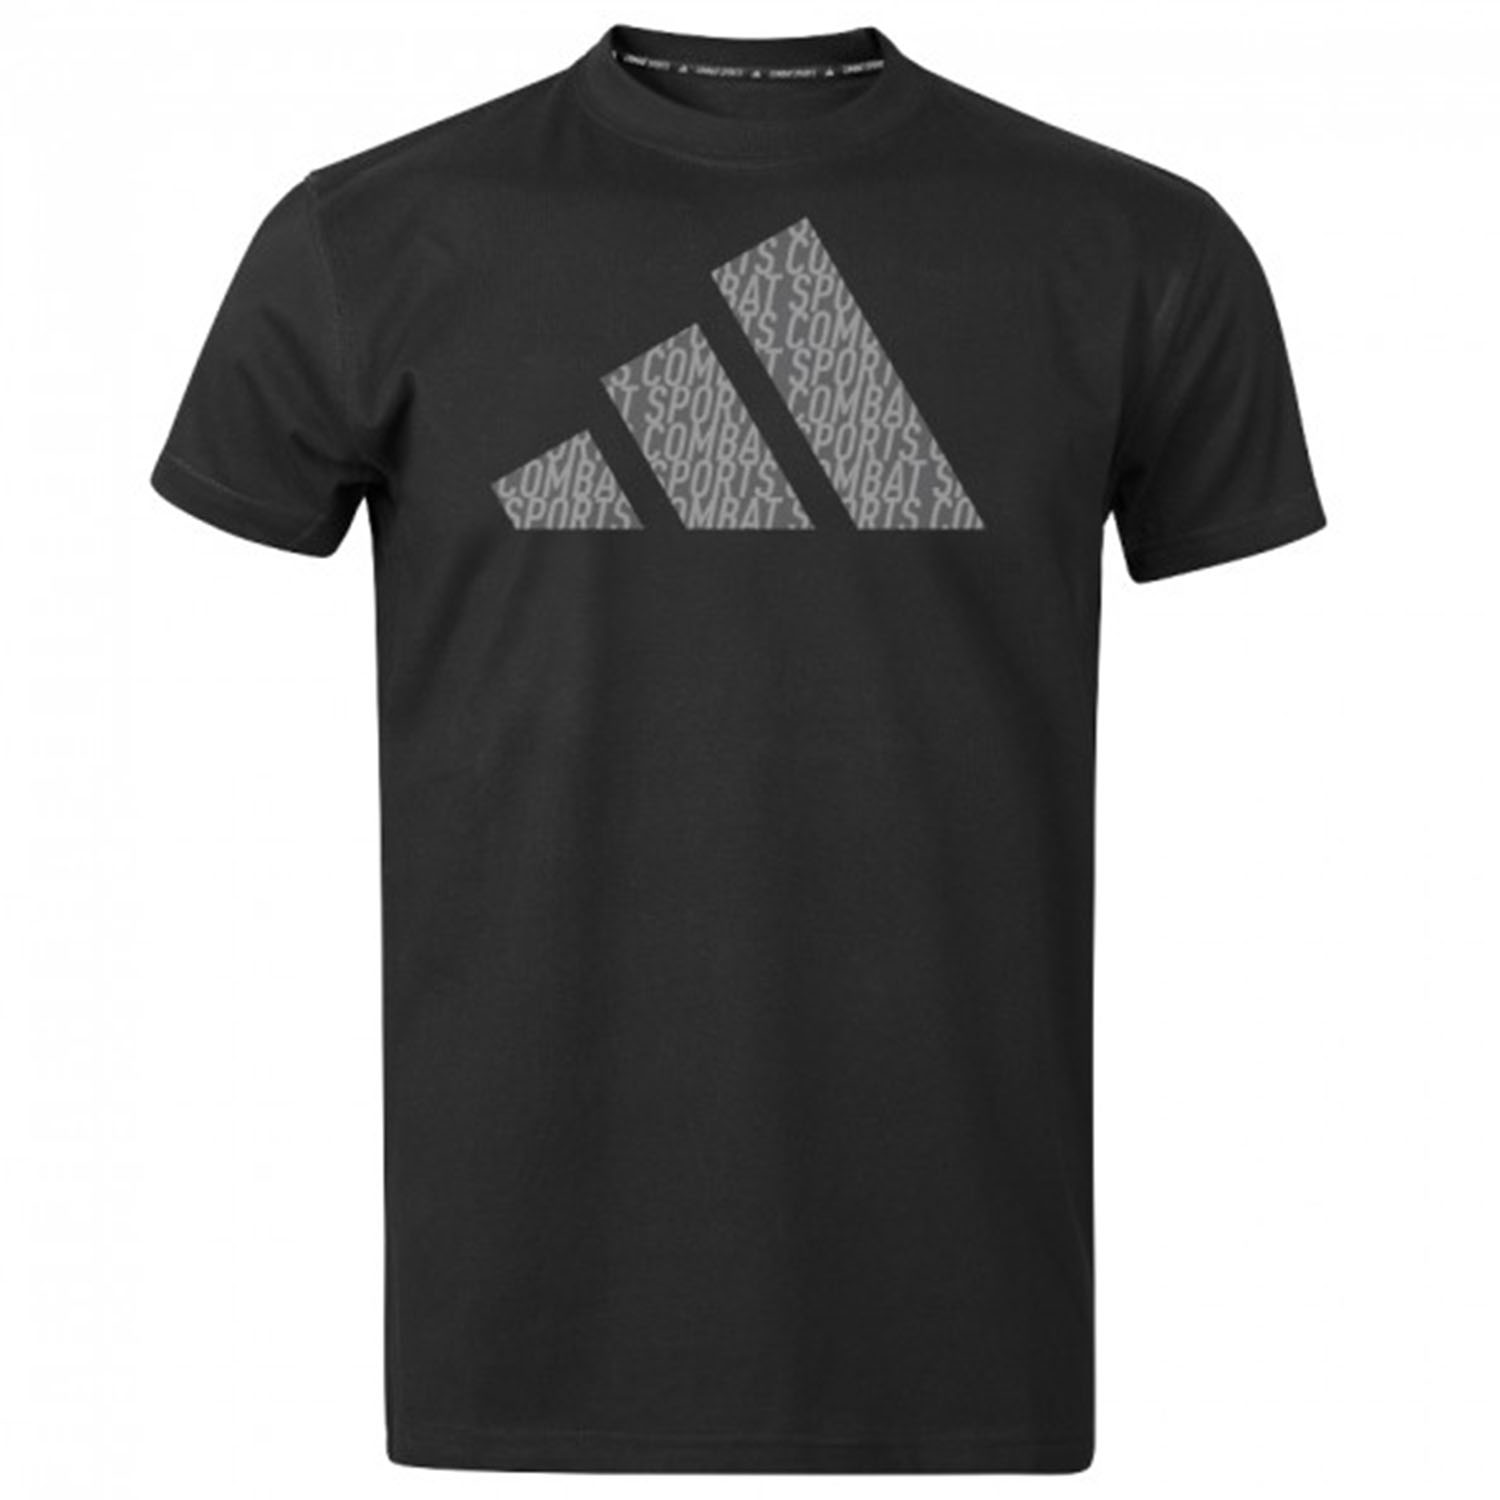 adidas T-Shirt, Perfo Script Graphic Combat Sports, schwarz, M